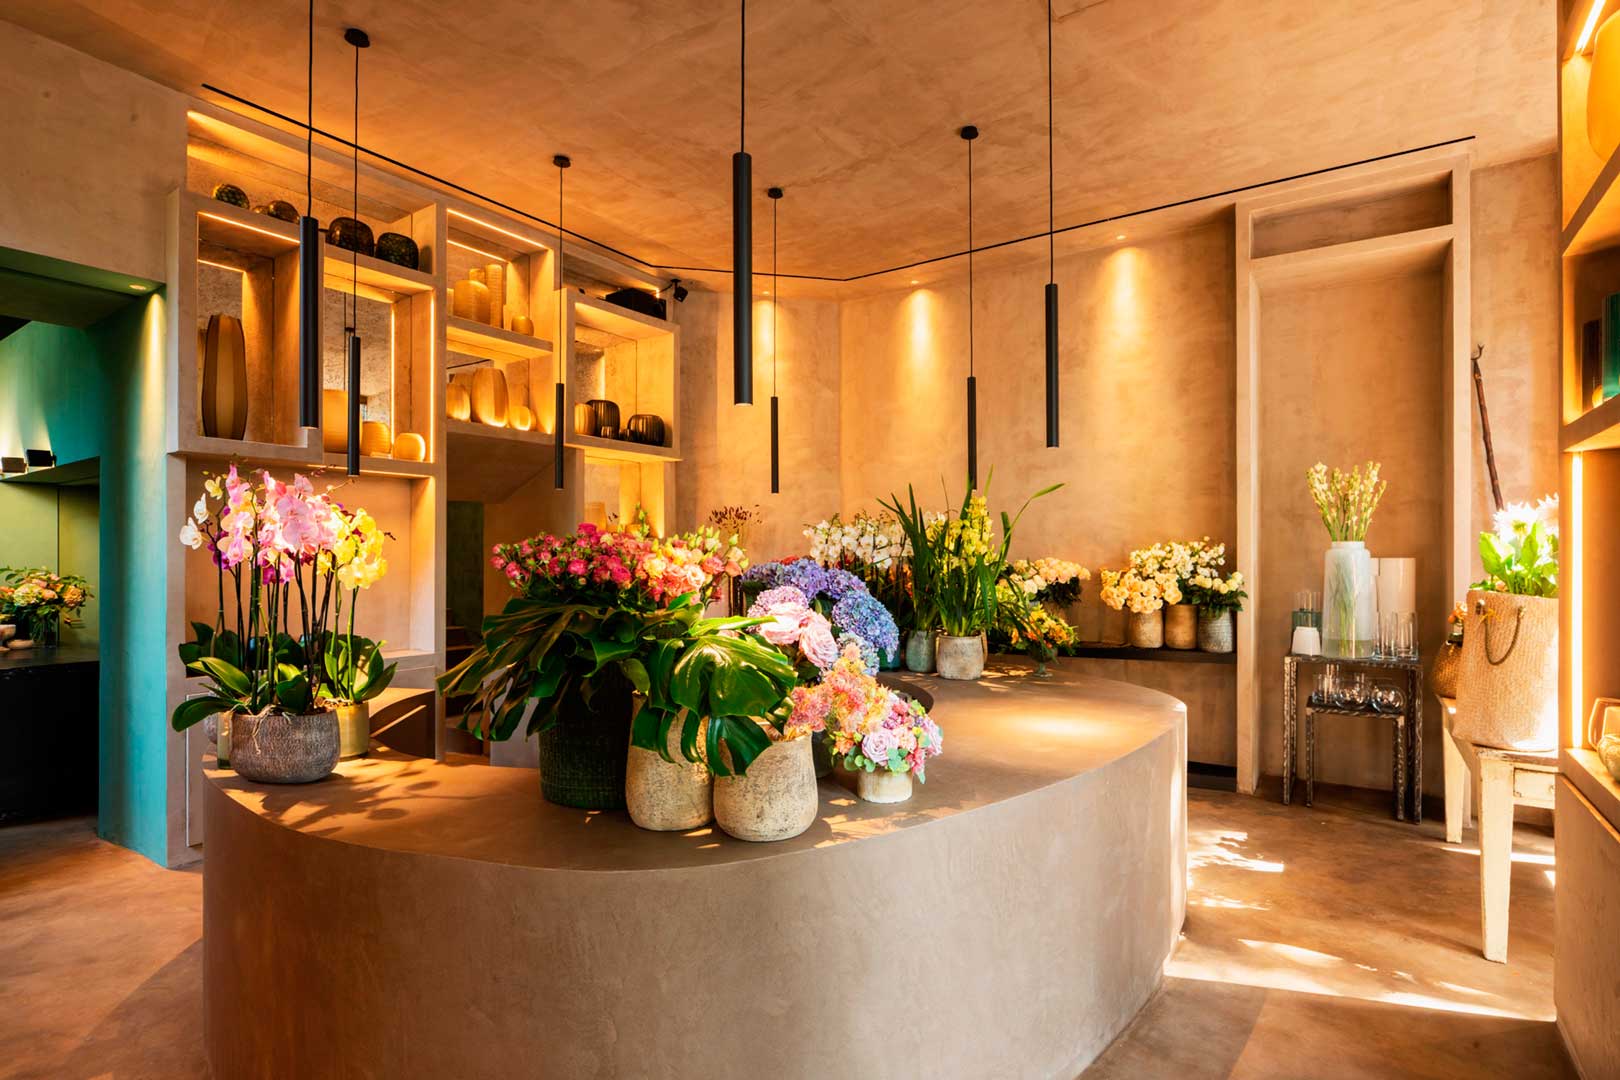 Negozi Di Fiori.The 10 Best Flower Shops In Milan Flawless Milano